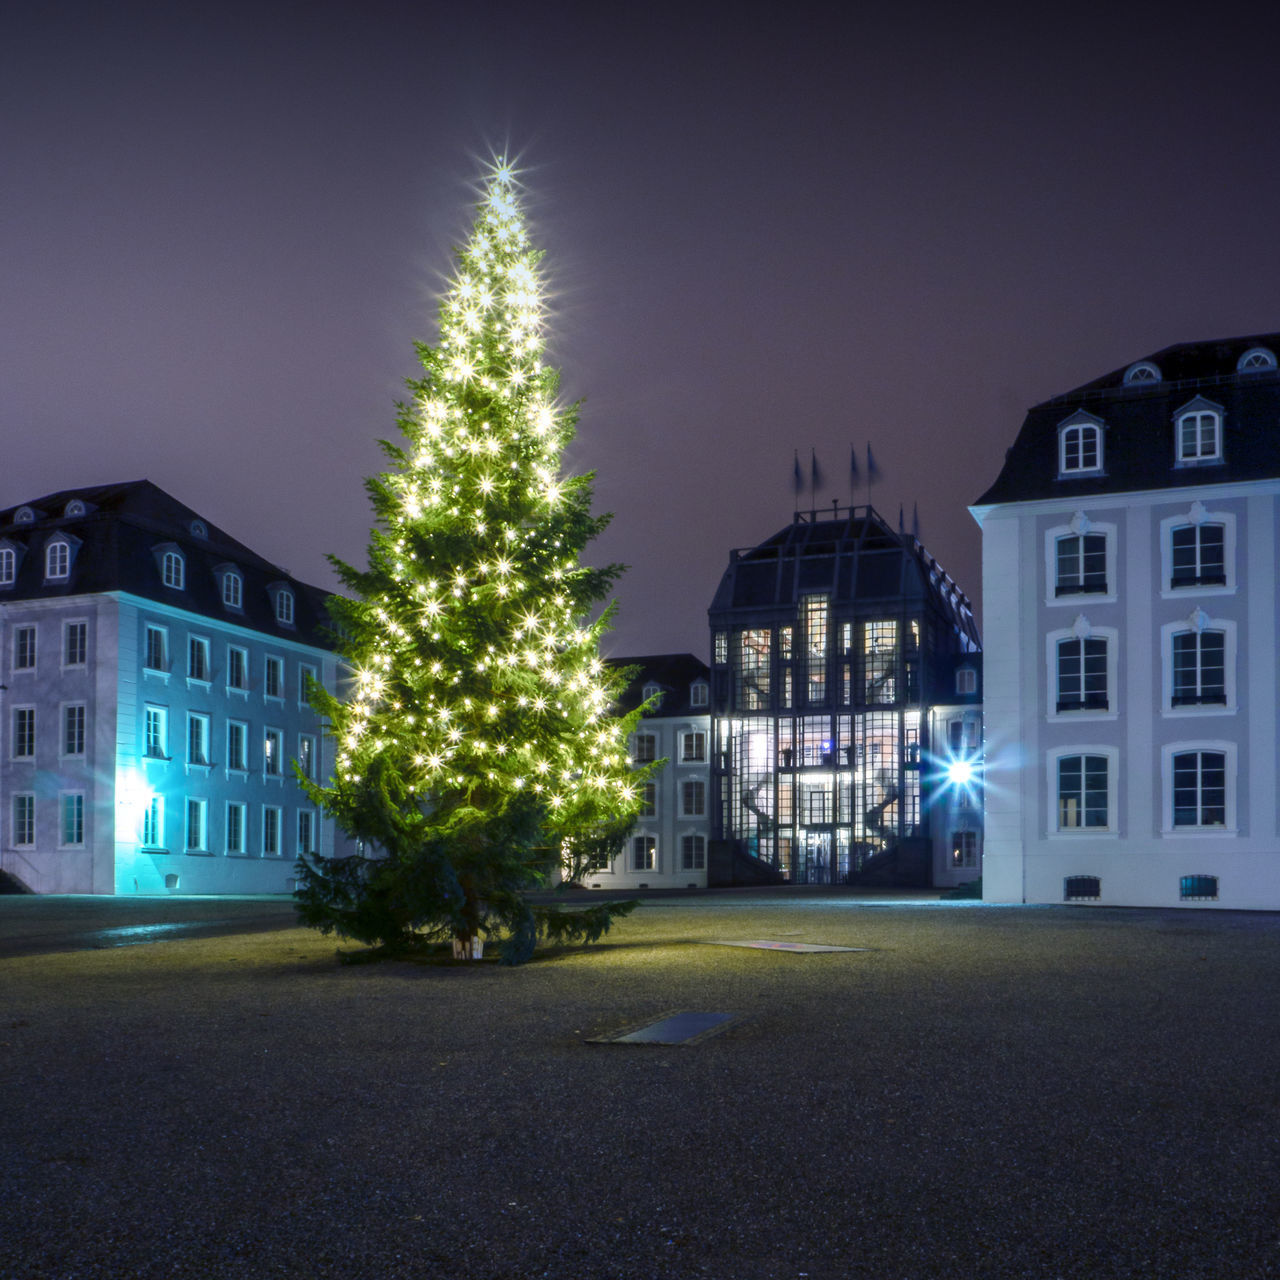 ILLUMINATED CHRISTMAS TREE BY BUILDING AGAINST SKY